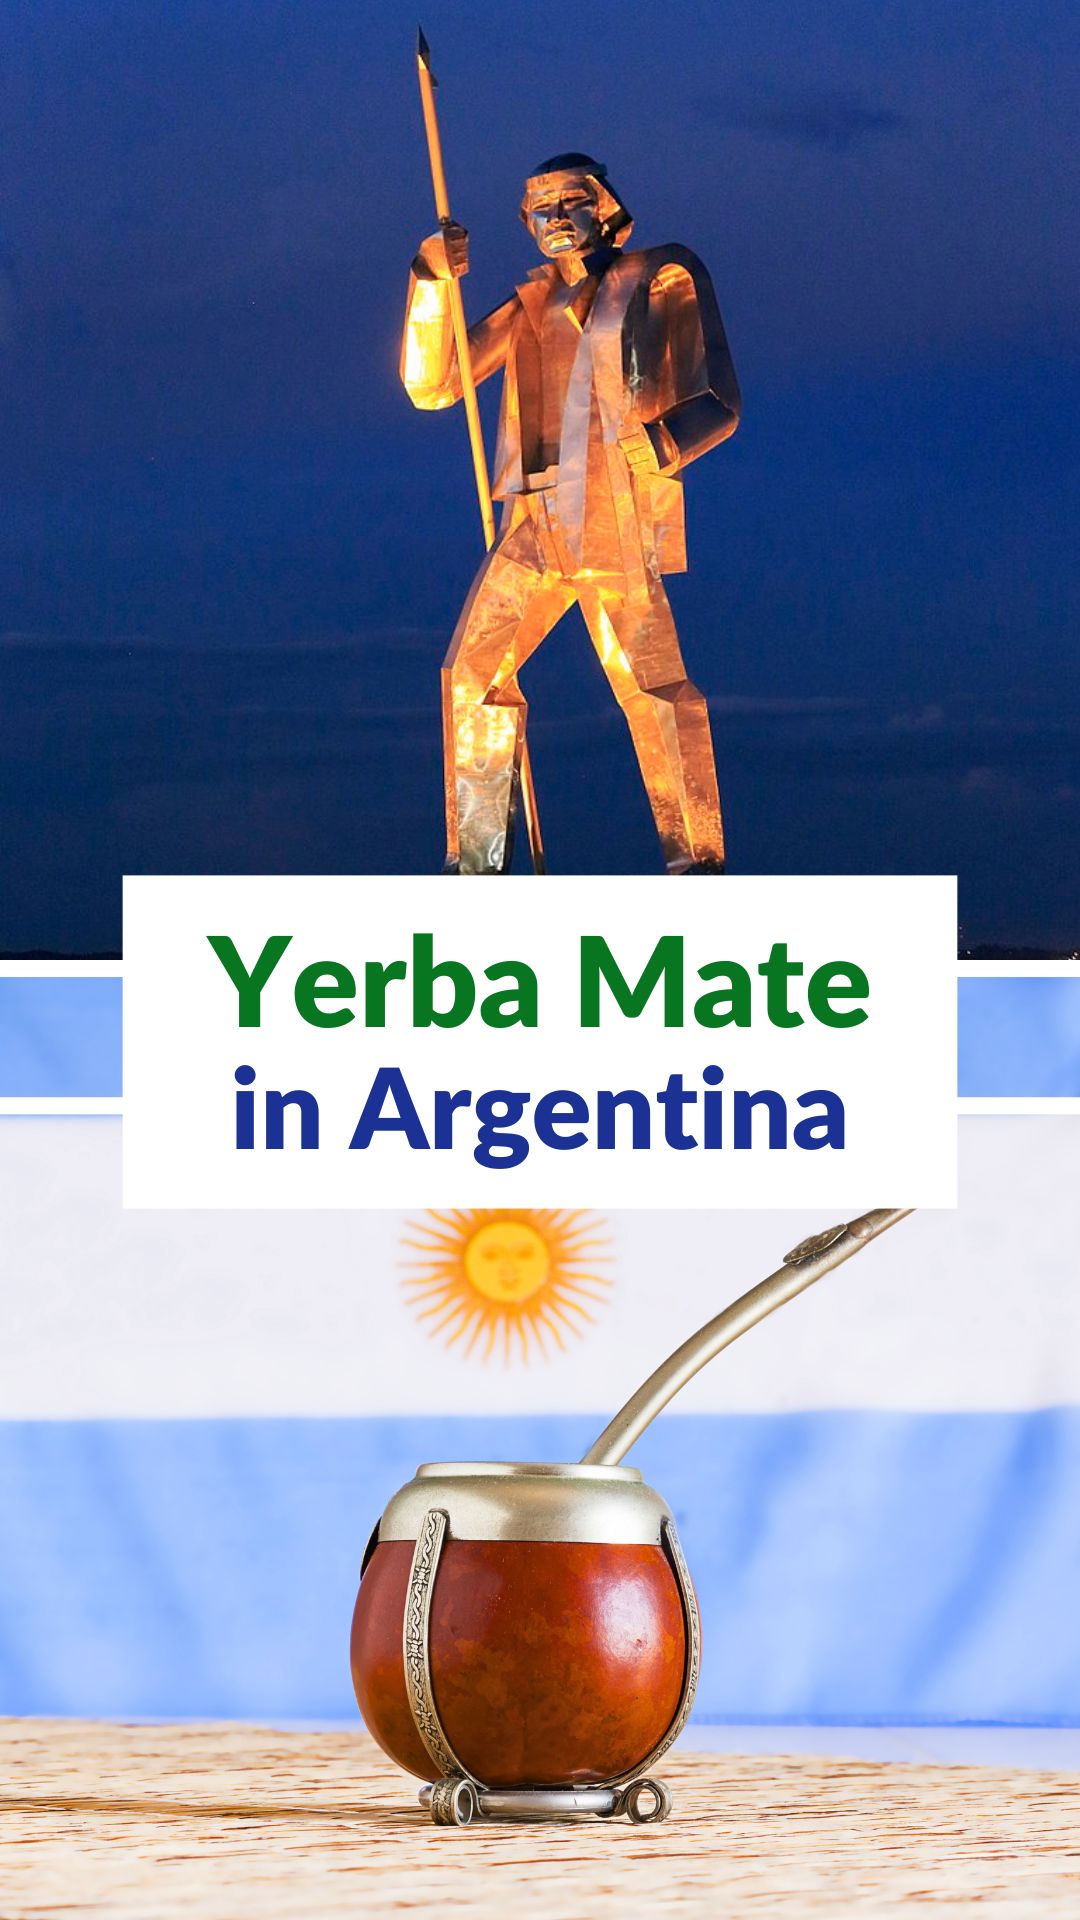 Yerba mate in Argentina